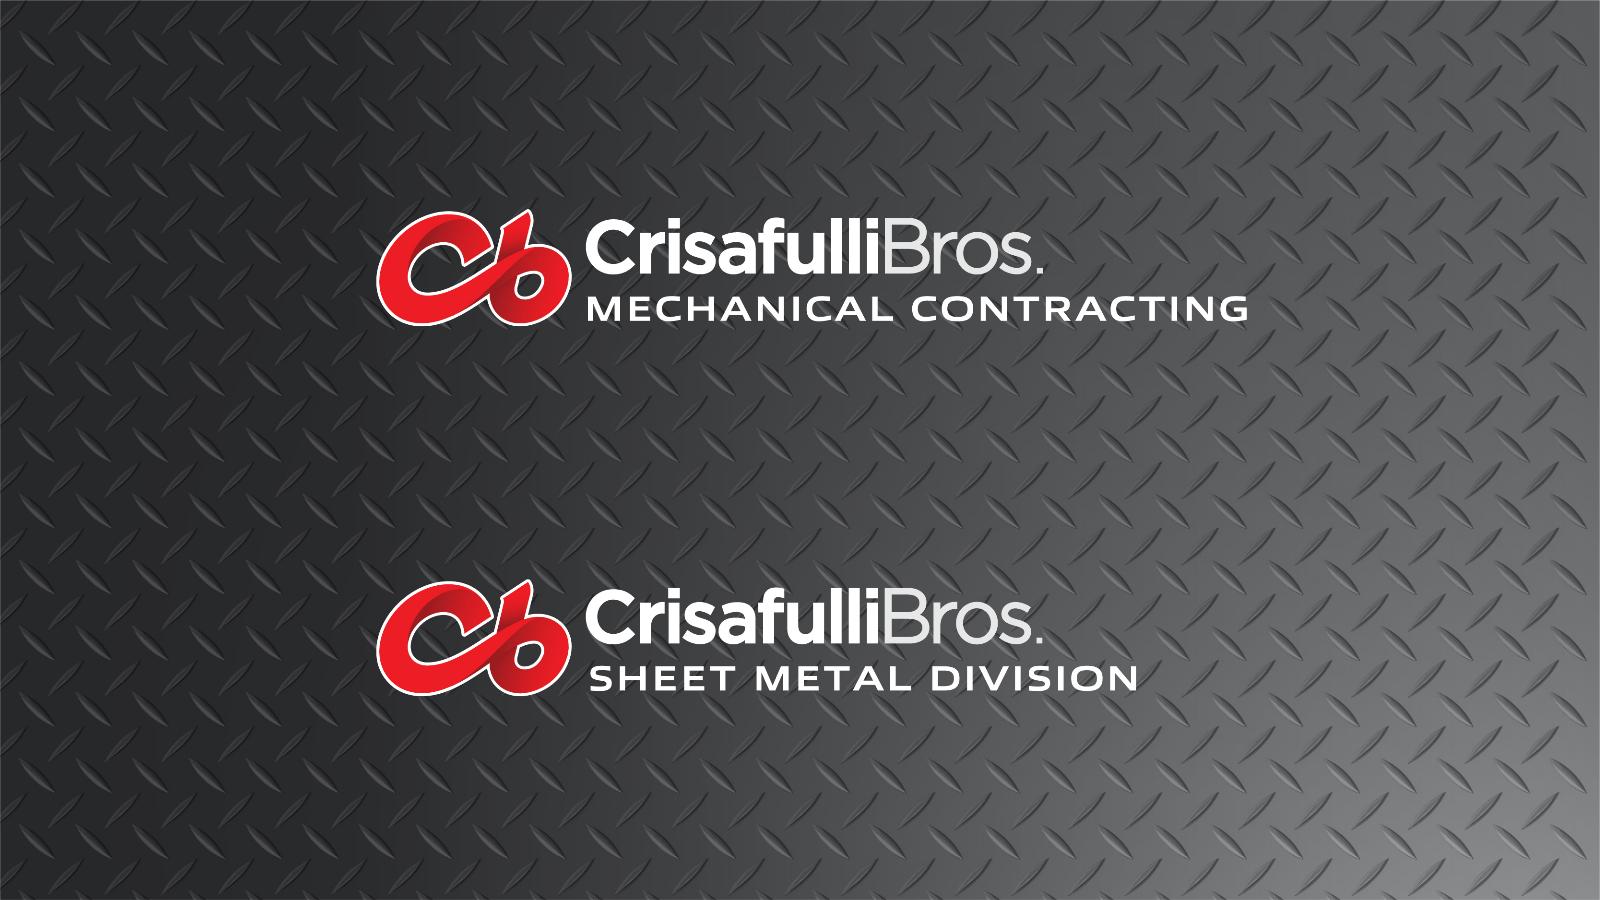 Crisafulli Bros. | Mechanical Contracting and Sheet Metal Division logos